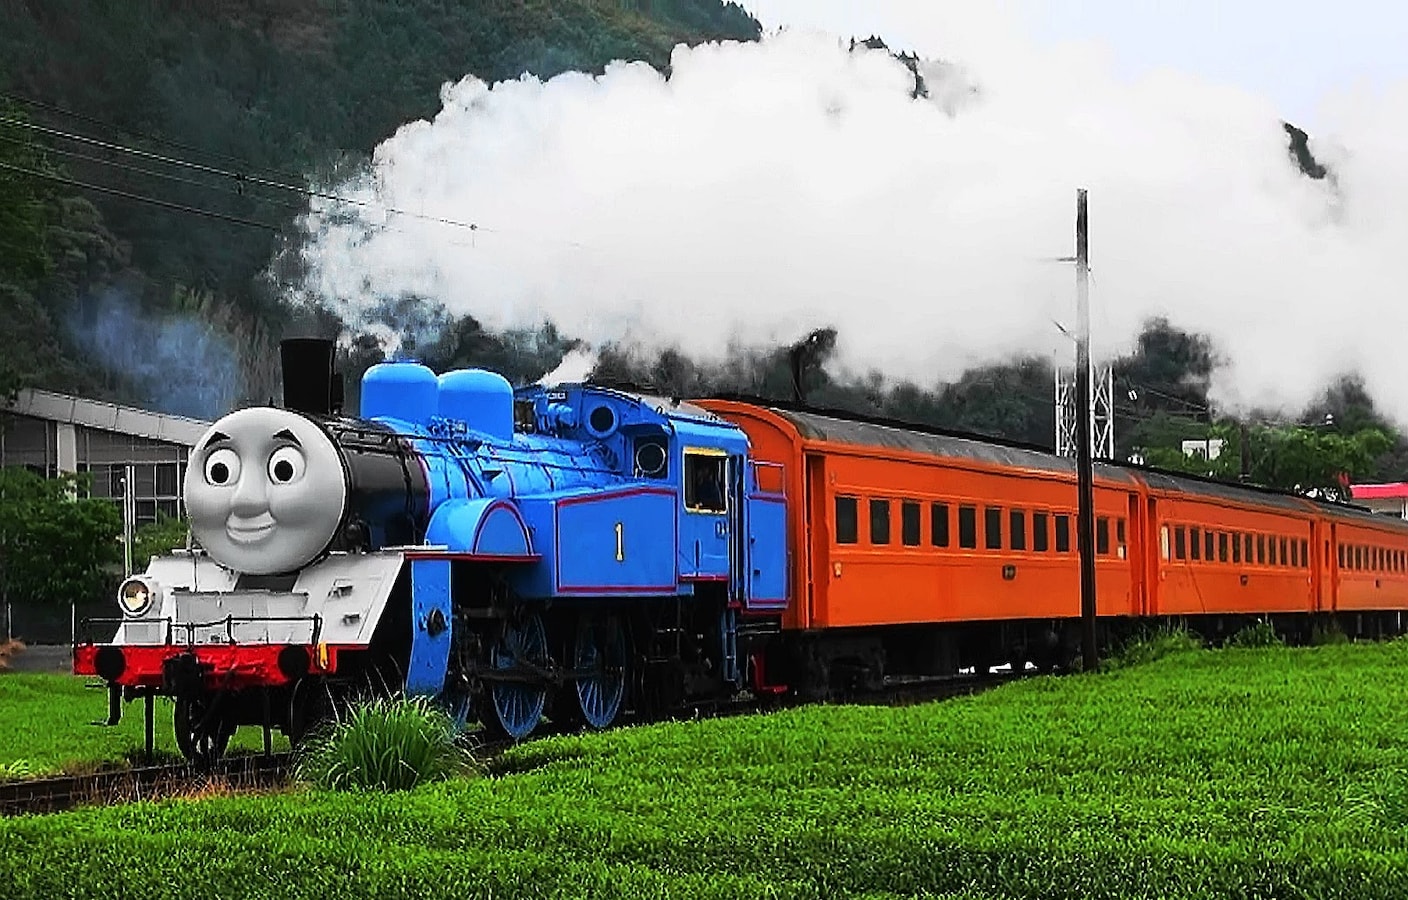 thomas train with steam